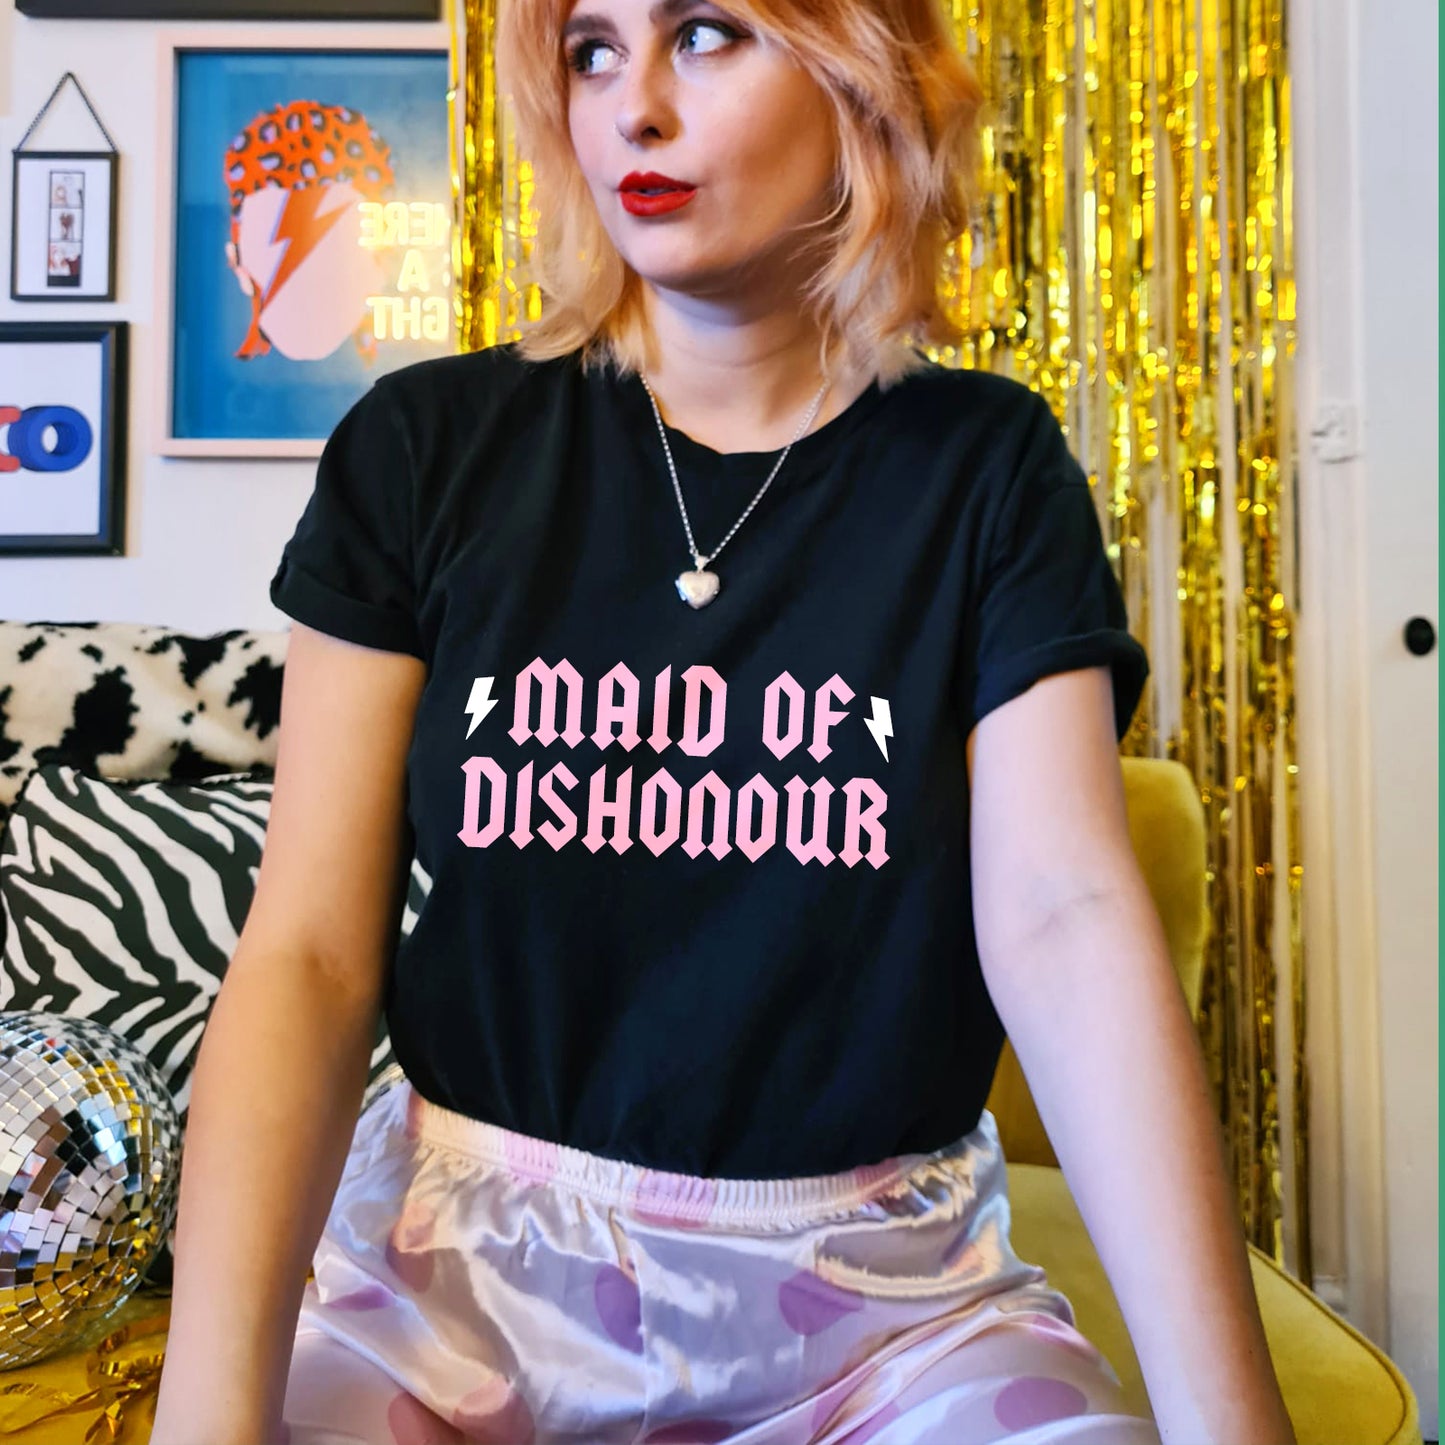 Rock 'n' Roll Maid Of Dishonour T-Shirt